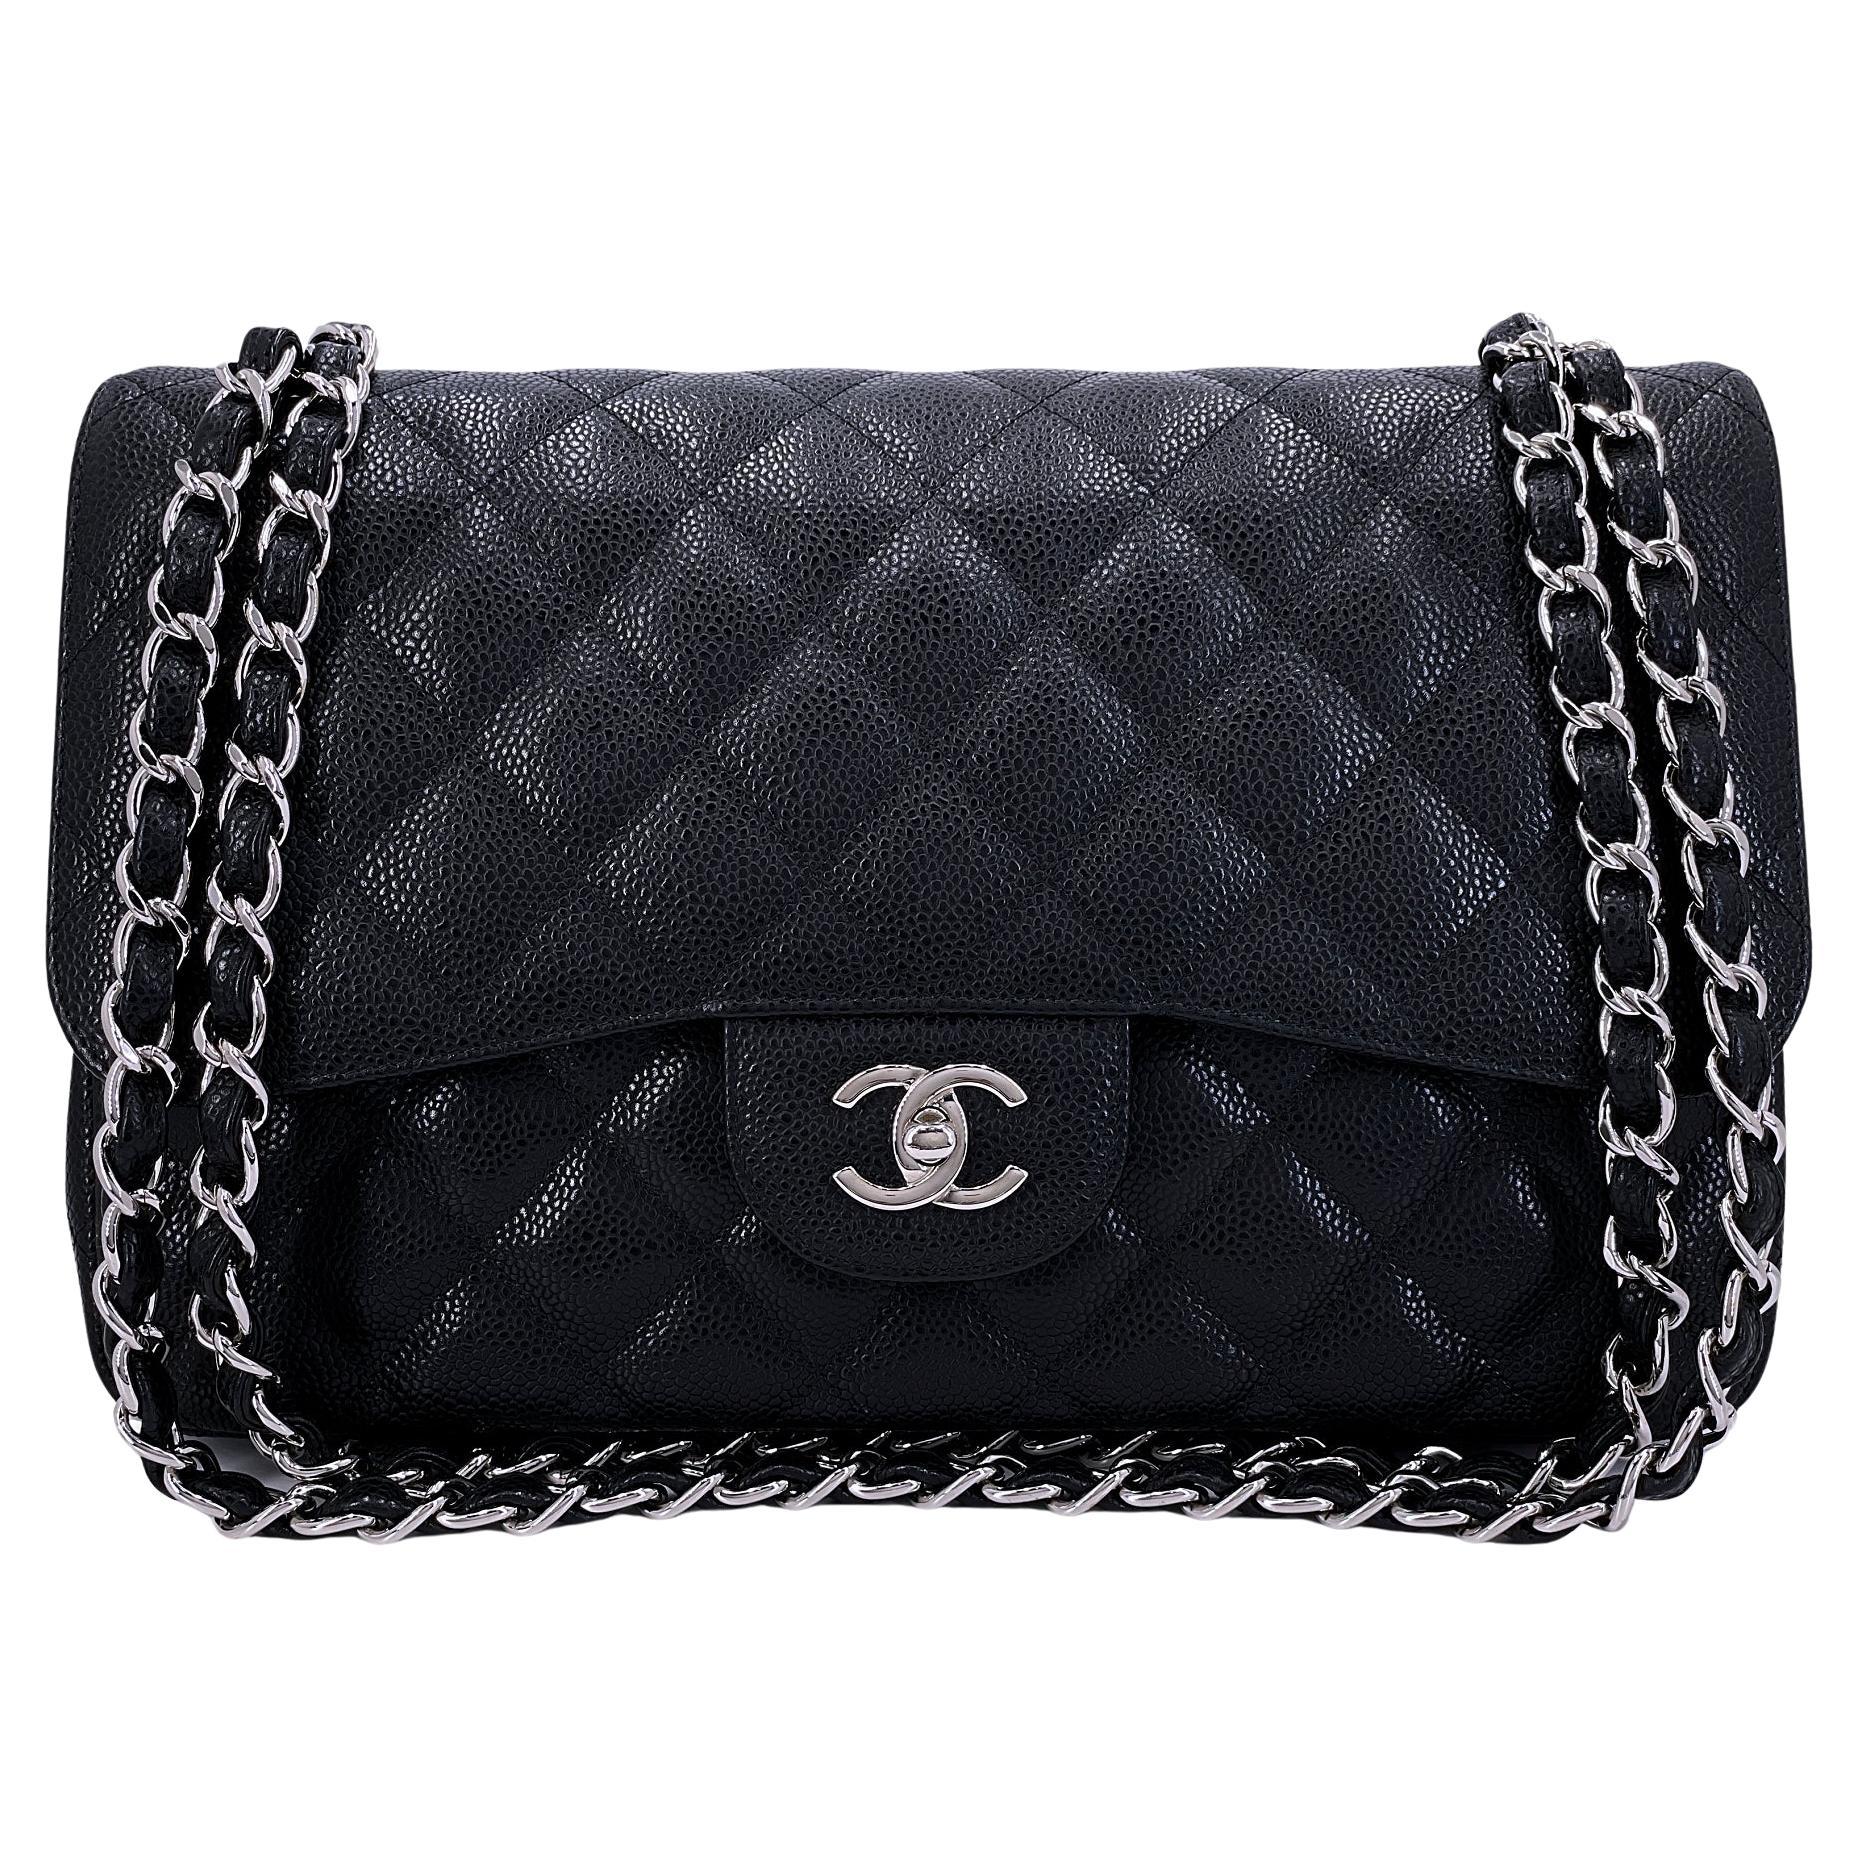 Chanel Black Caviar Jumbo Classic Double Flap Bag SHW 66170 For Sale